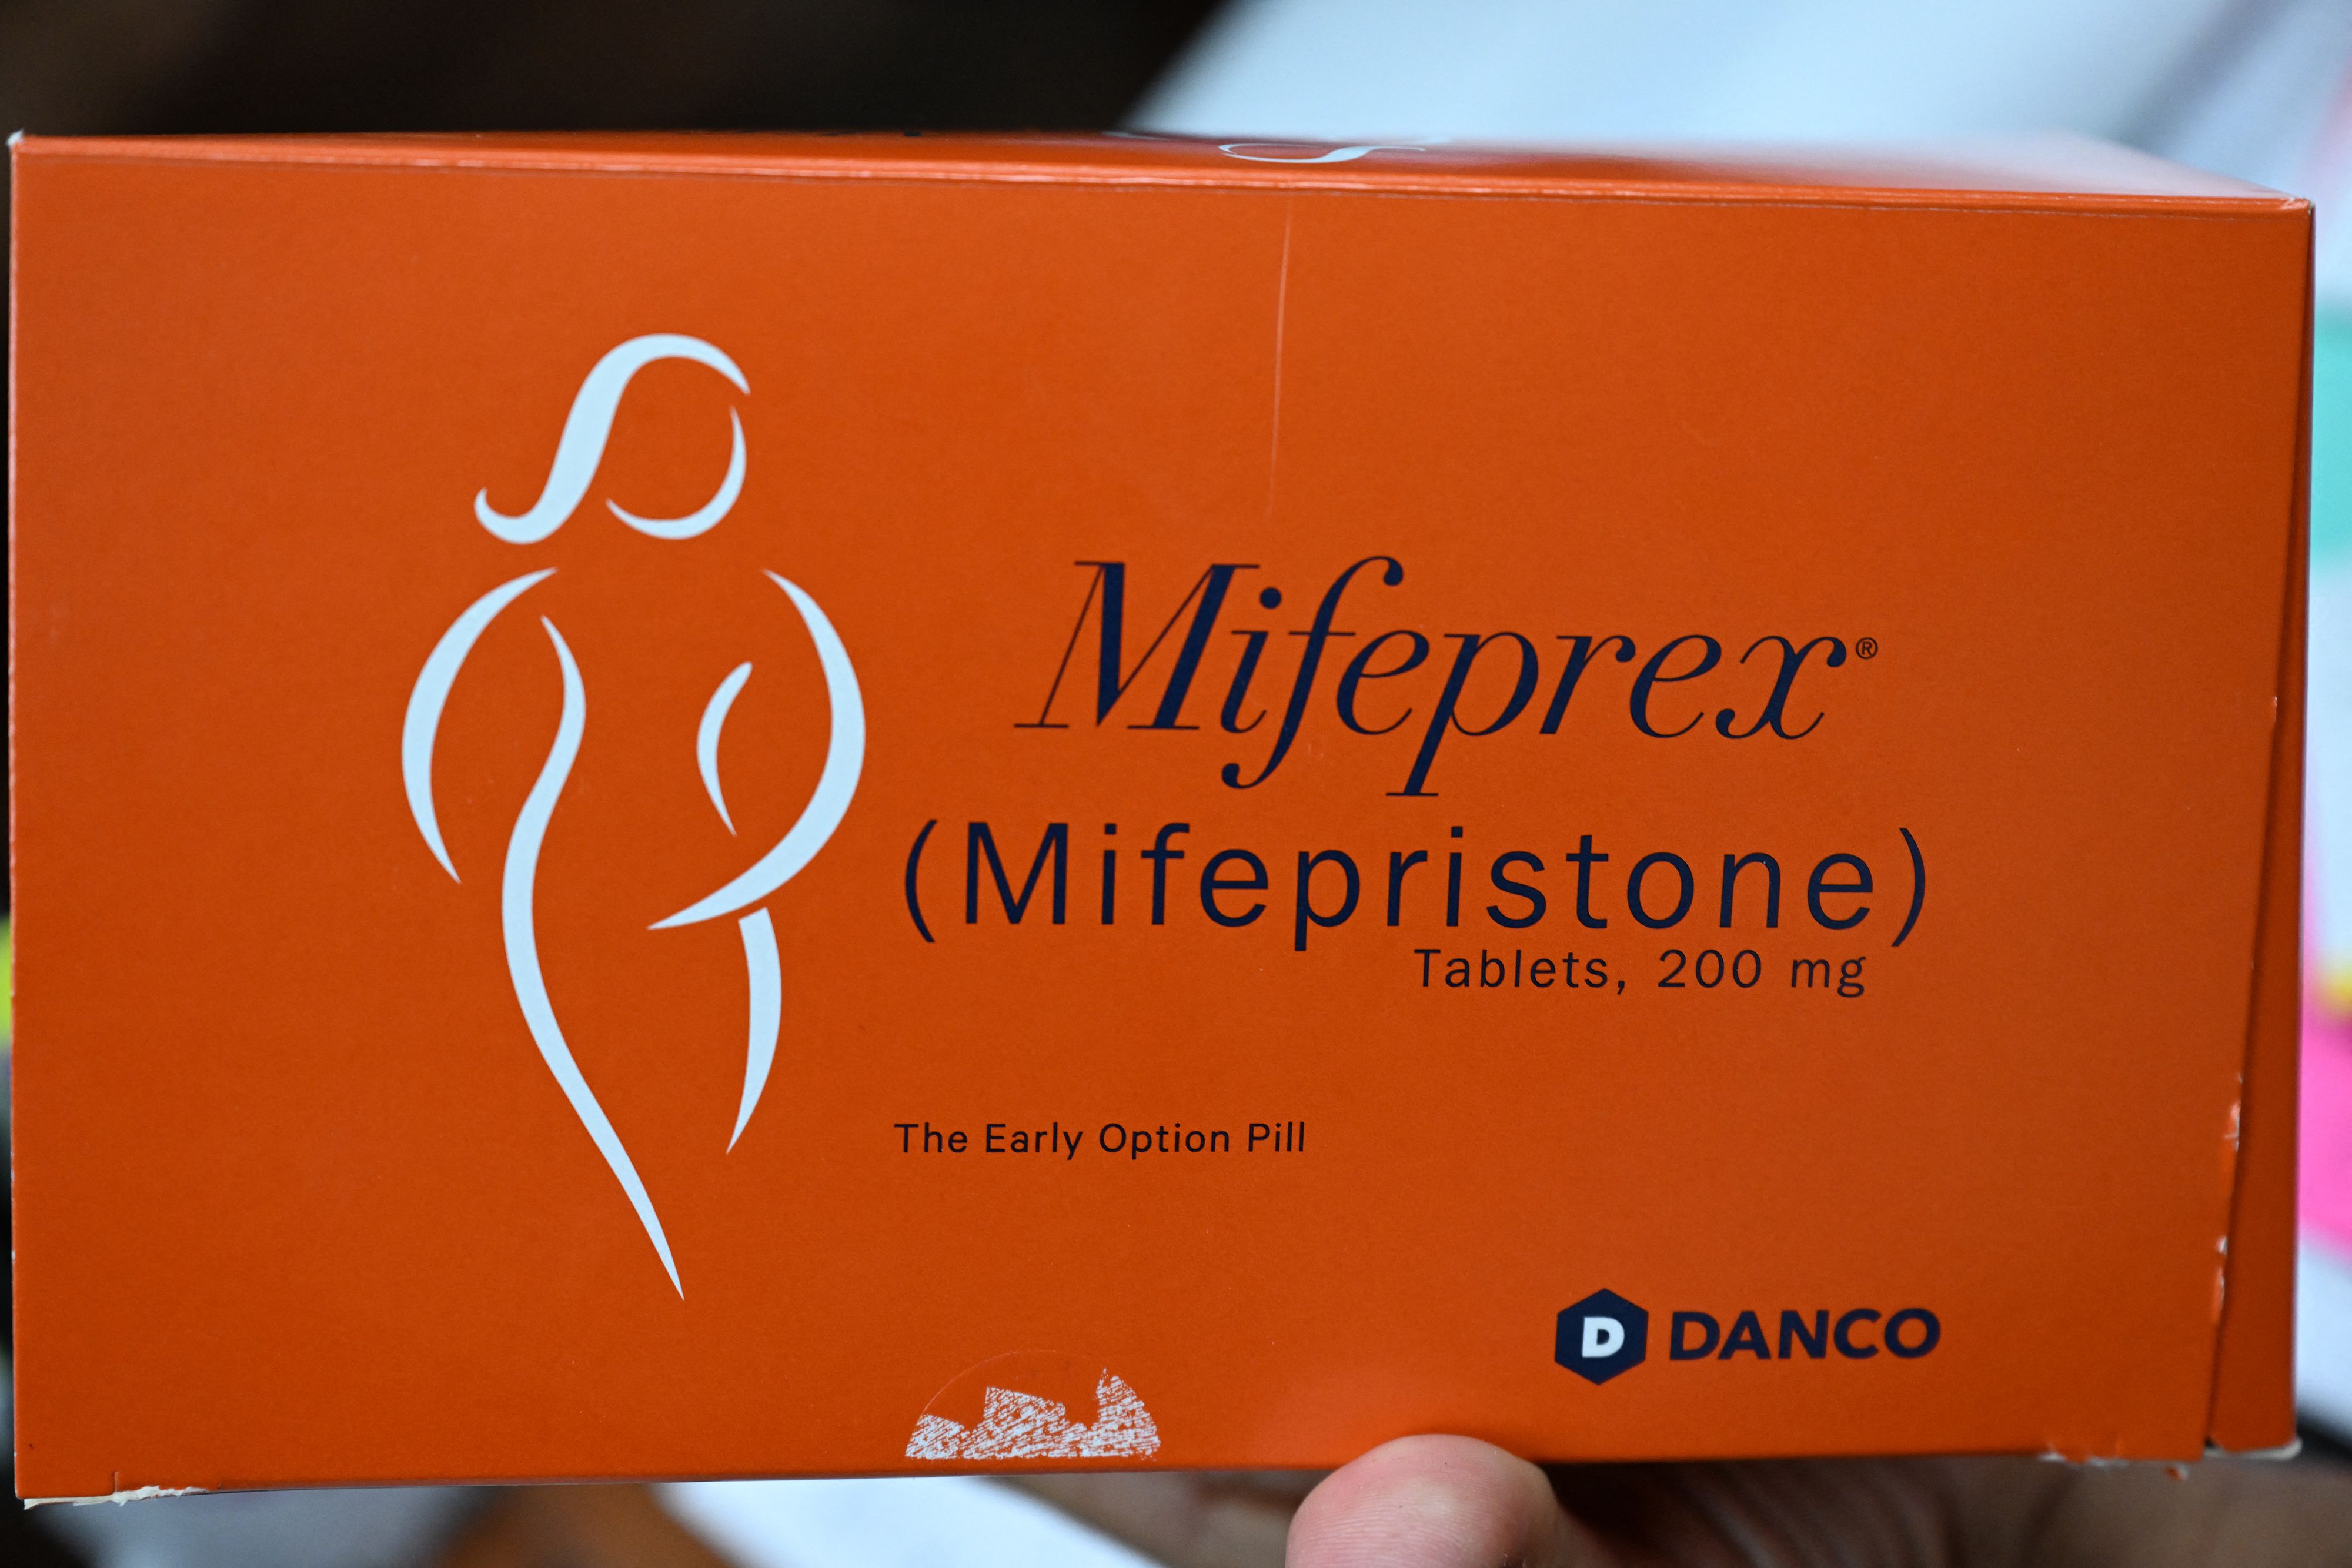 A photo of a box of mifepristone.